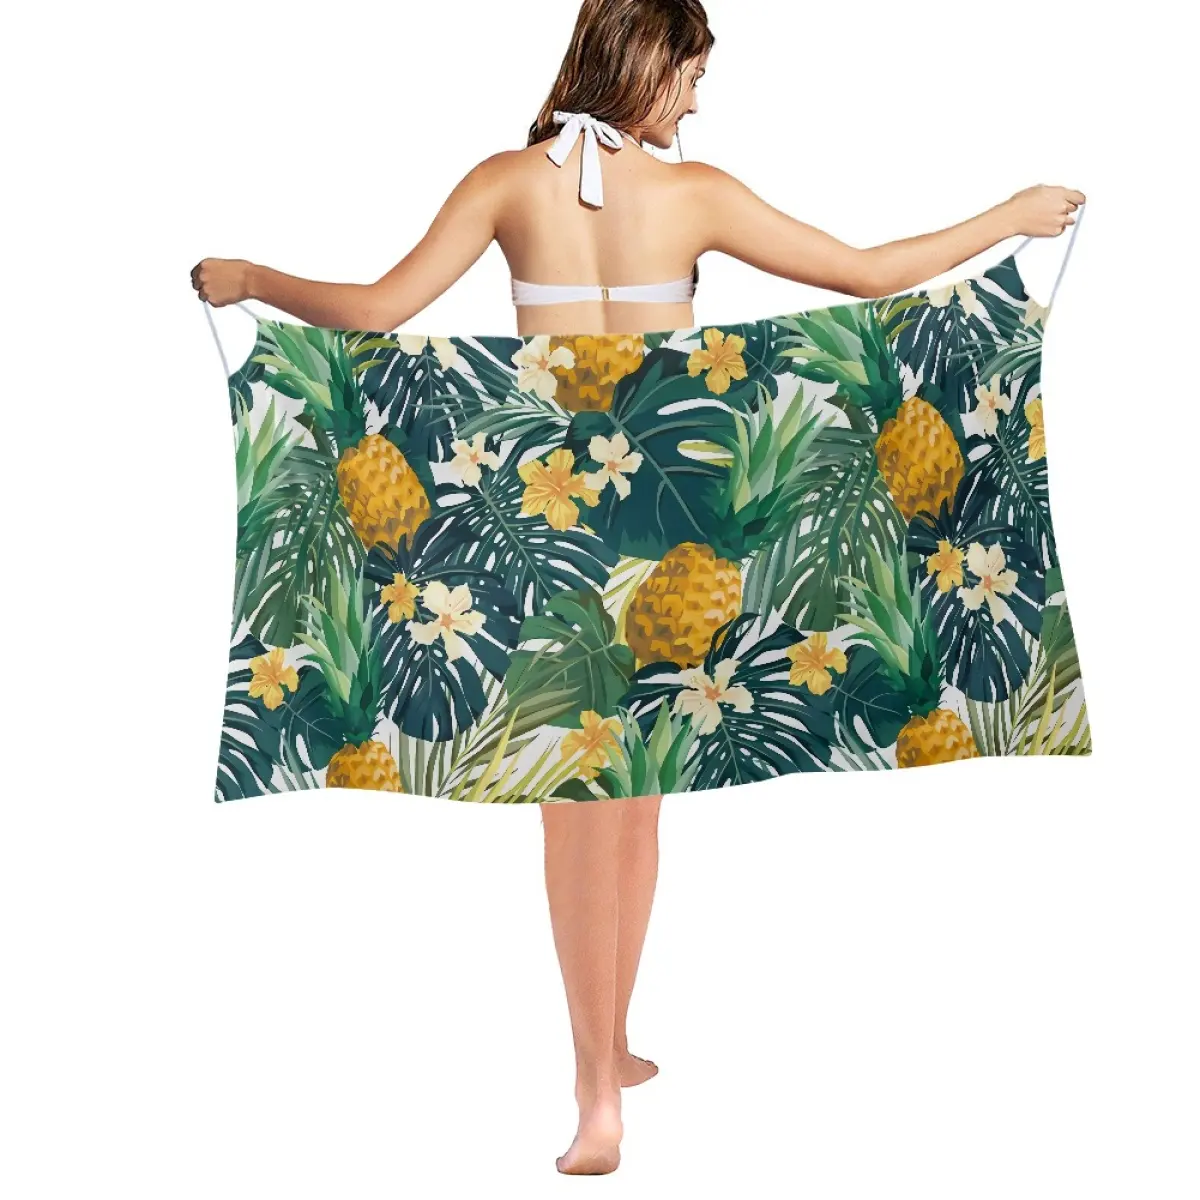 One Size Beach Cover Ups For Women Hawaii Tropical Design Bikini Beach Wear Cover Up High Quality Beach Kaftan Cover Up Dress